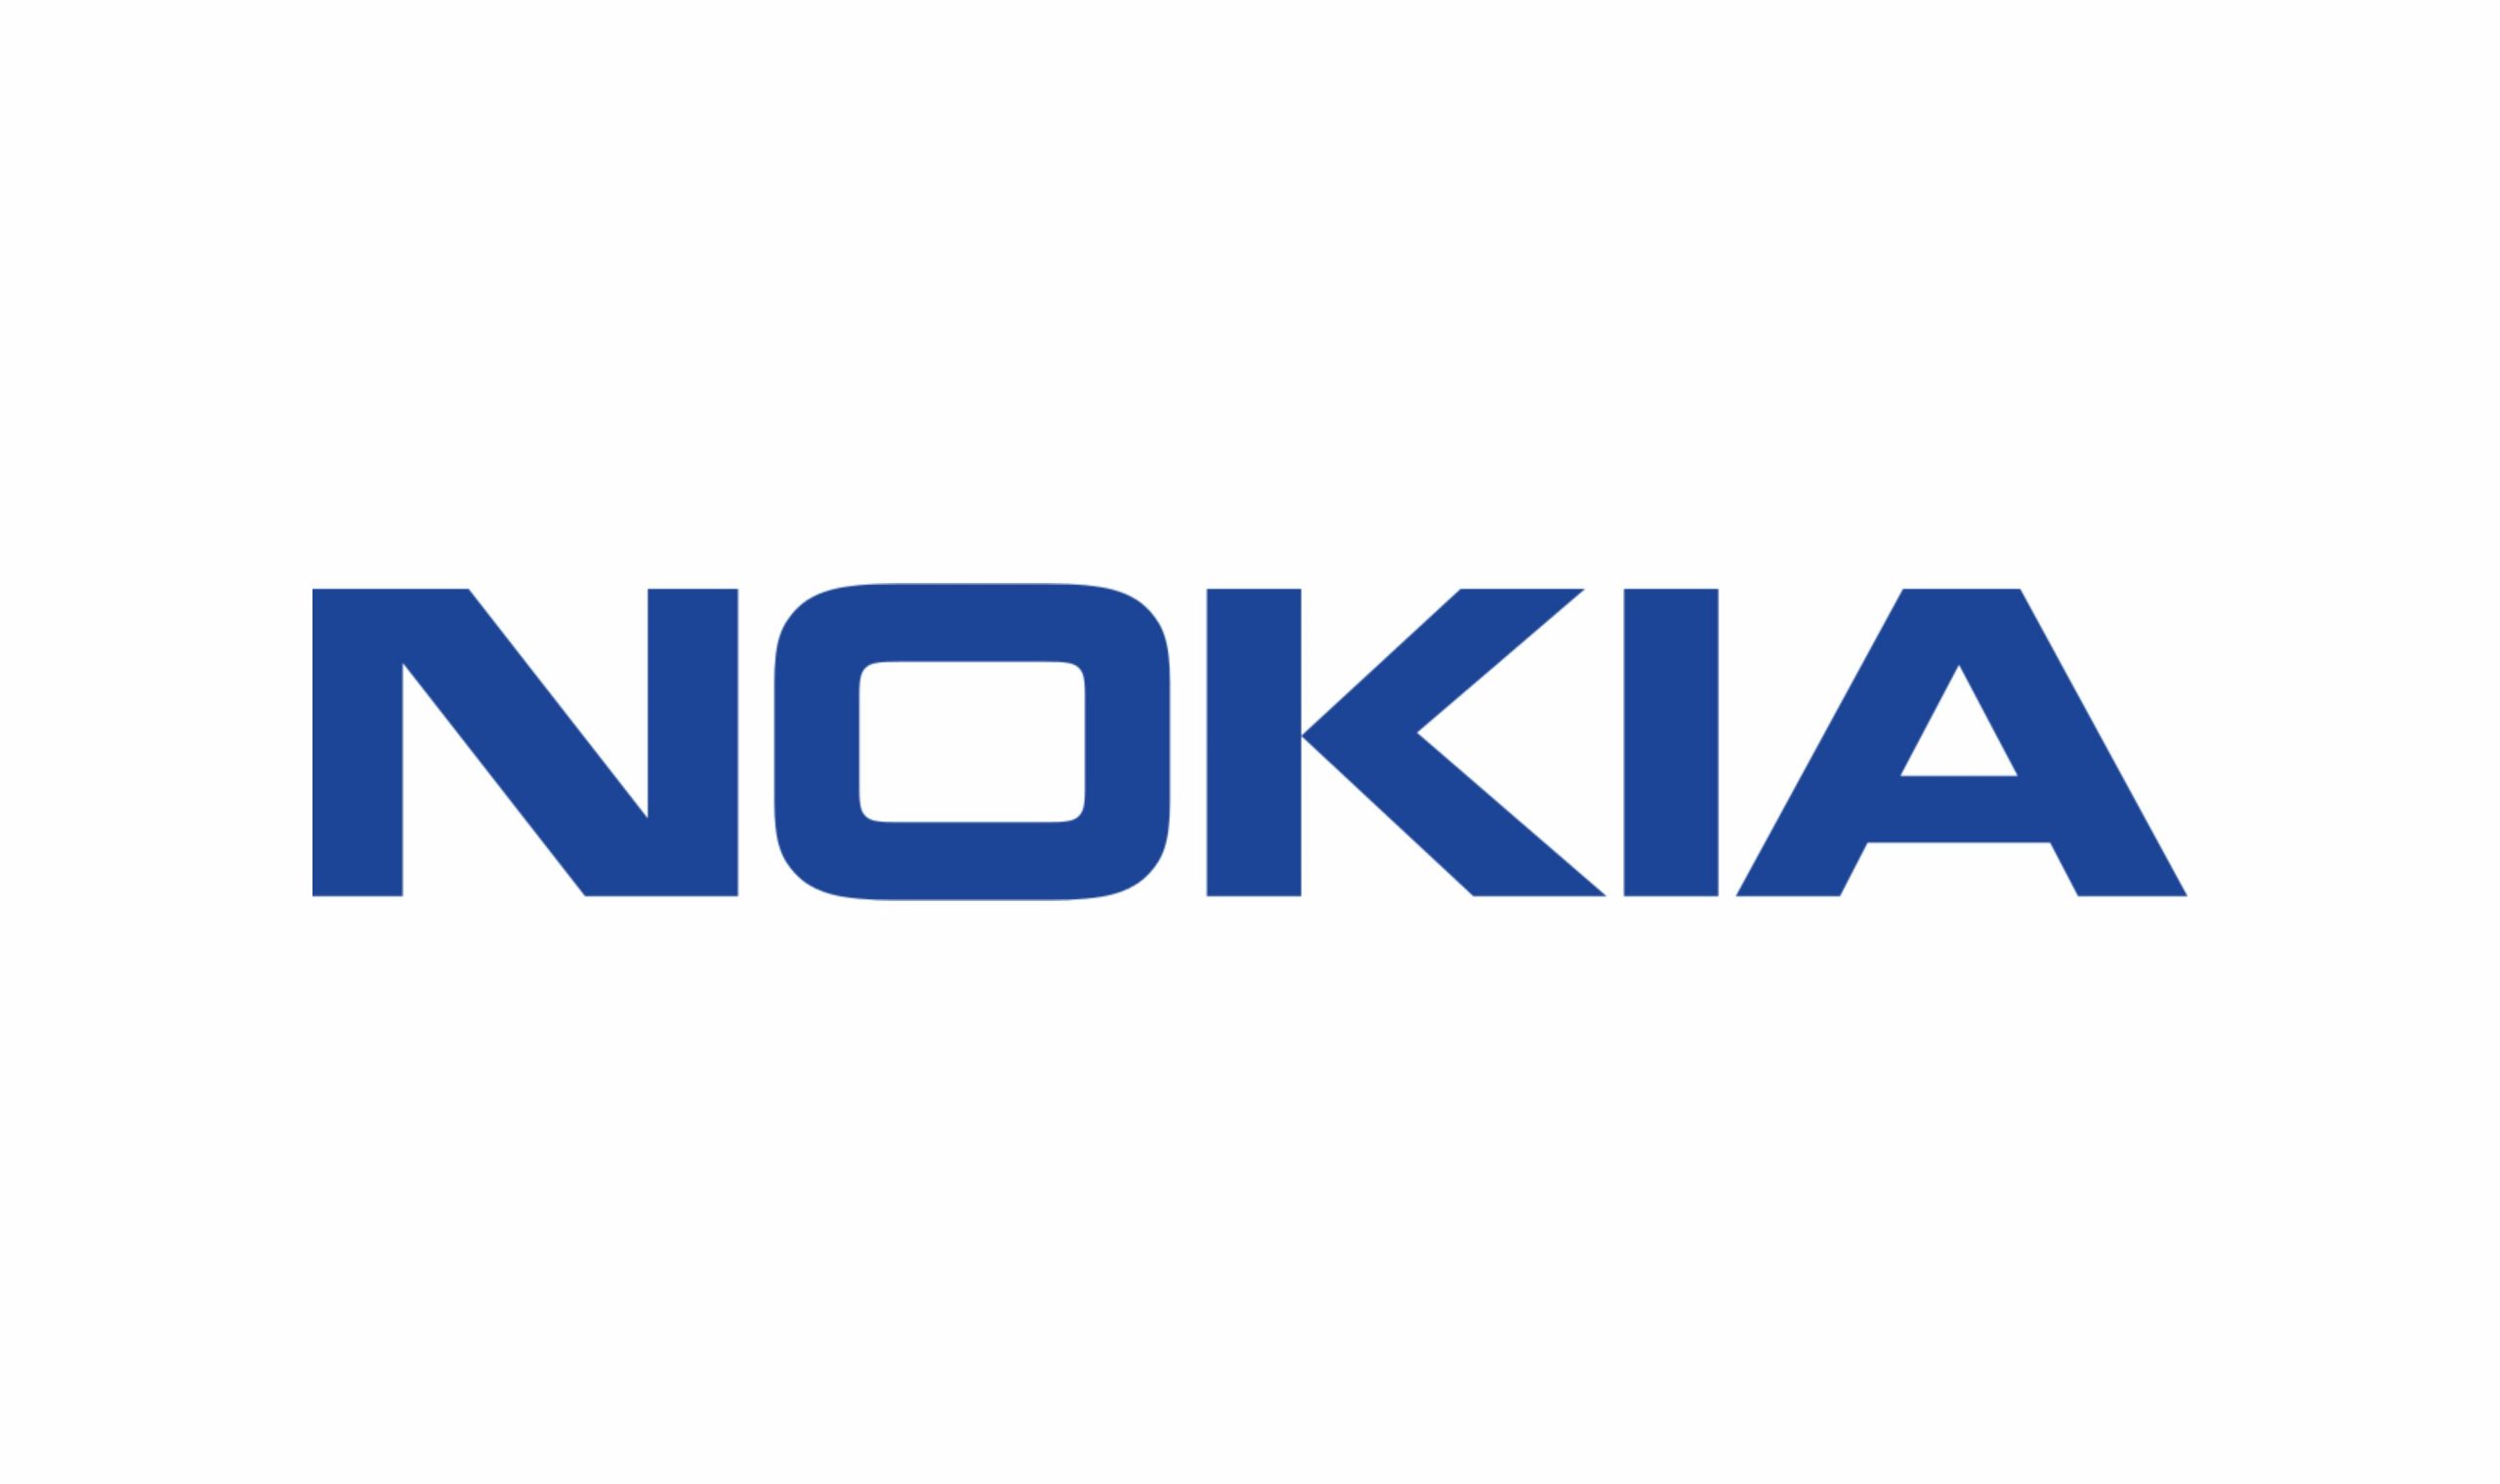 Nokia G10 gets certified by Malaysia’s SIRIM